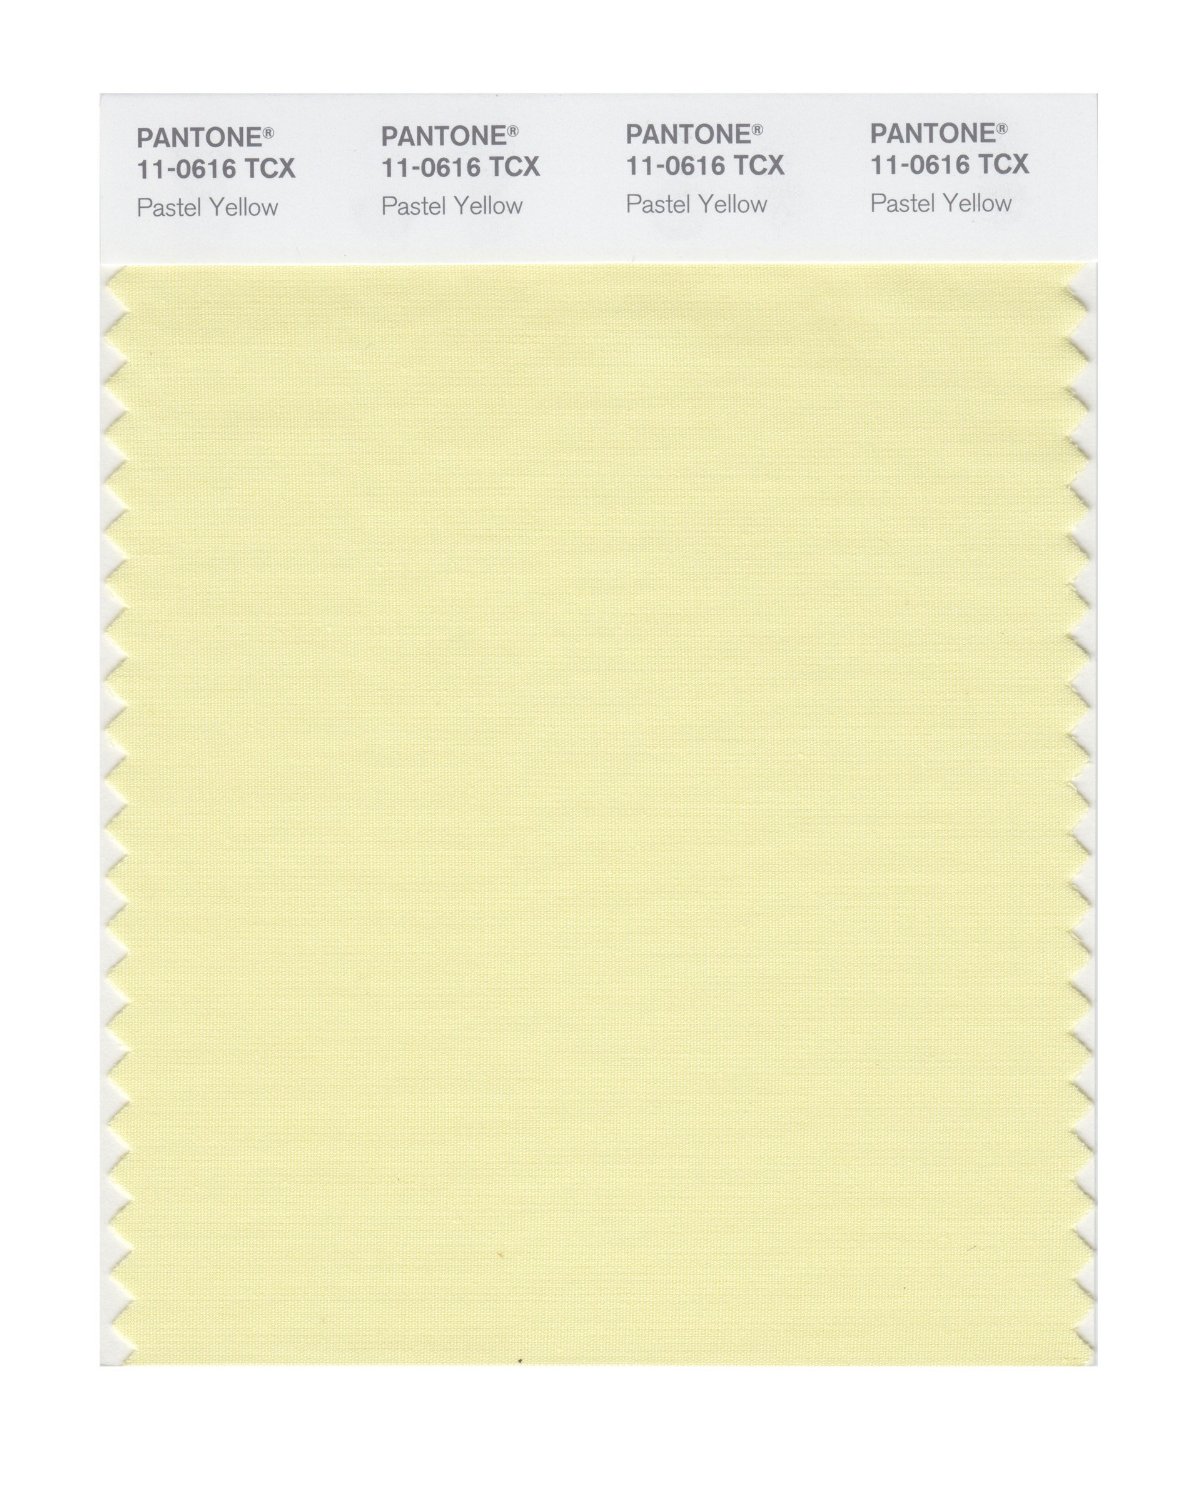 Pantone Cotton Swatch 11-0616 Pastel Yellow